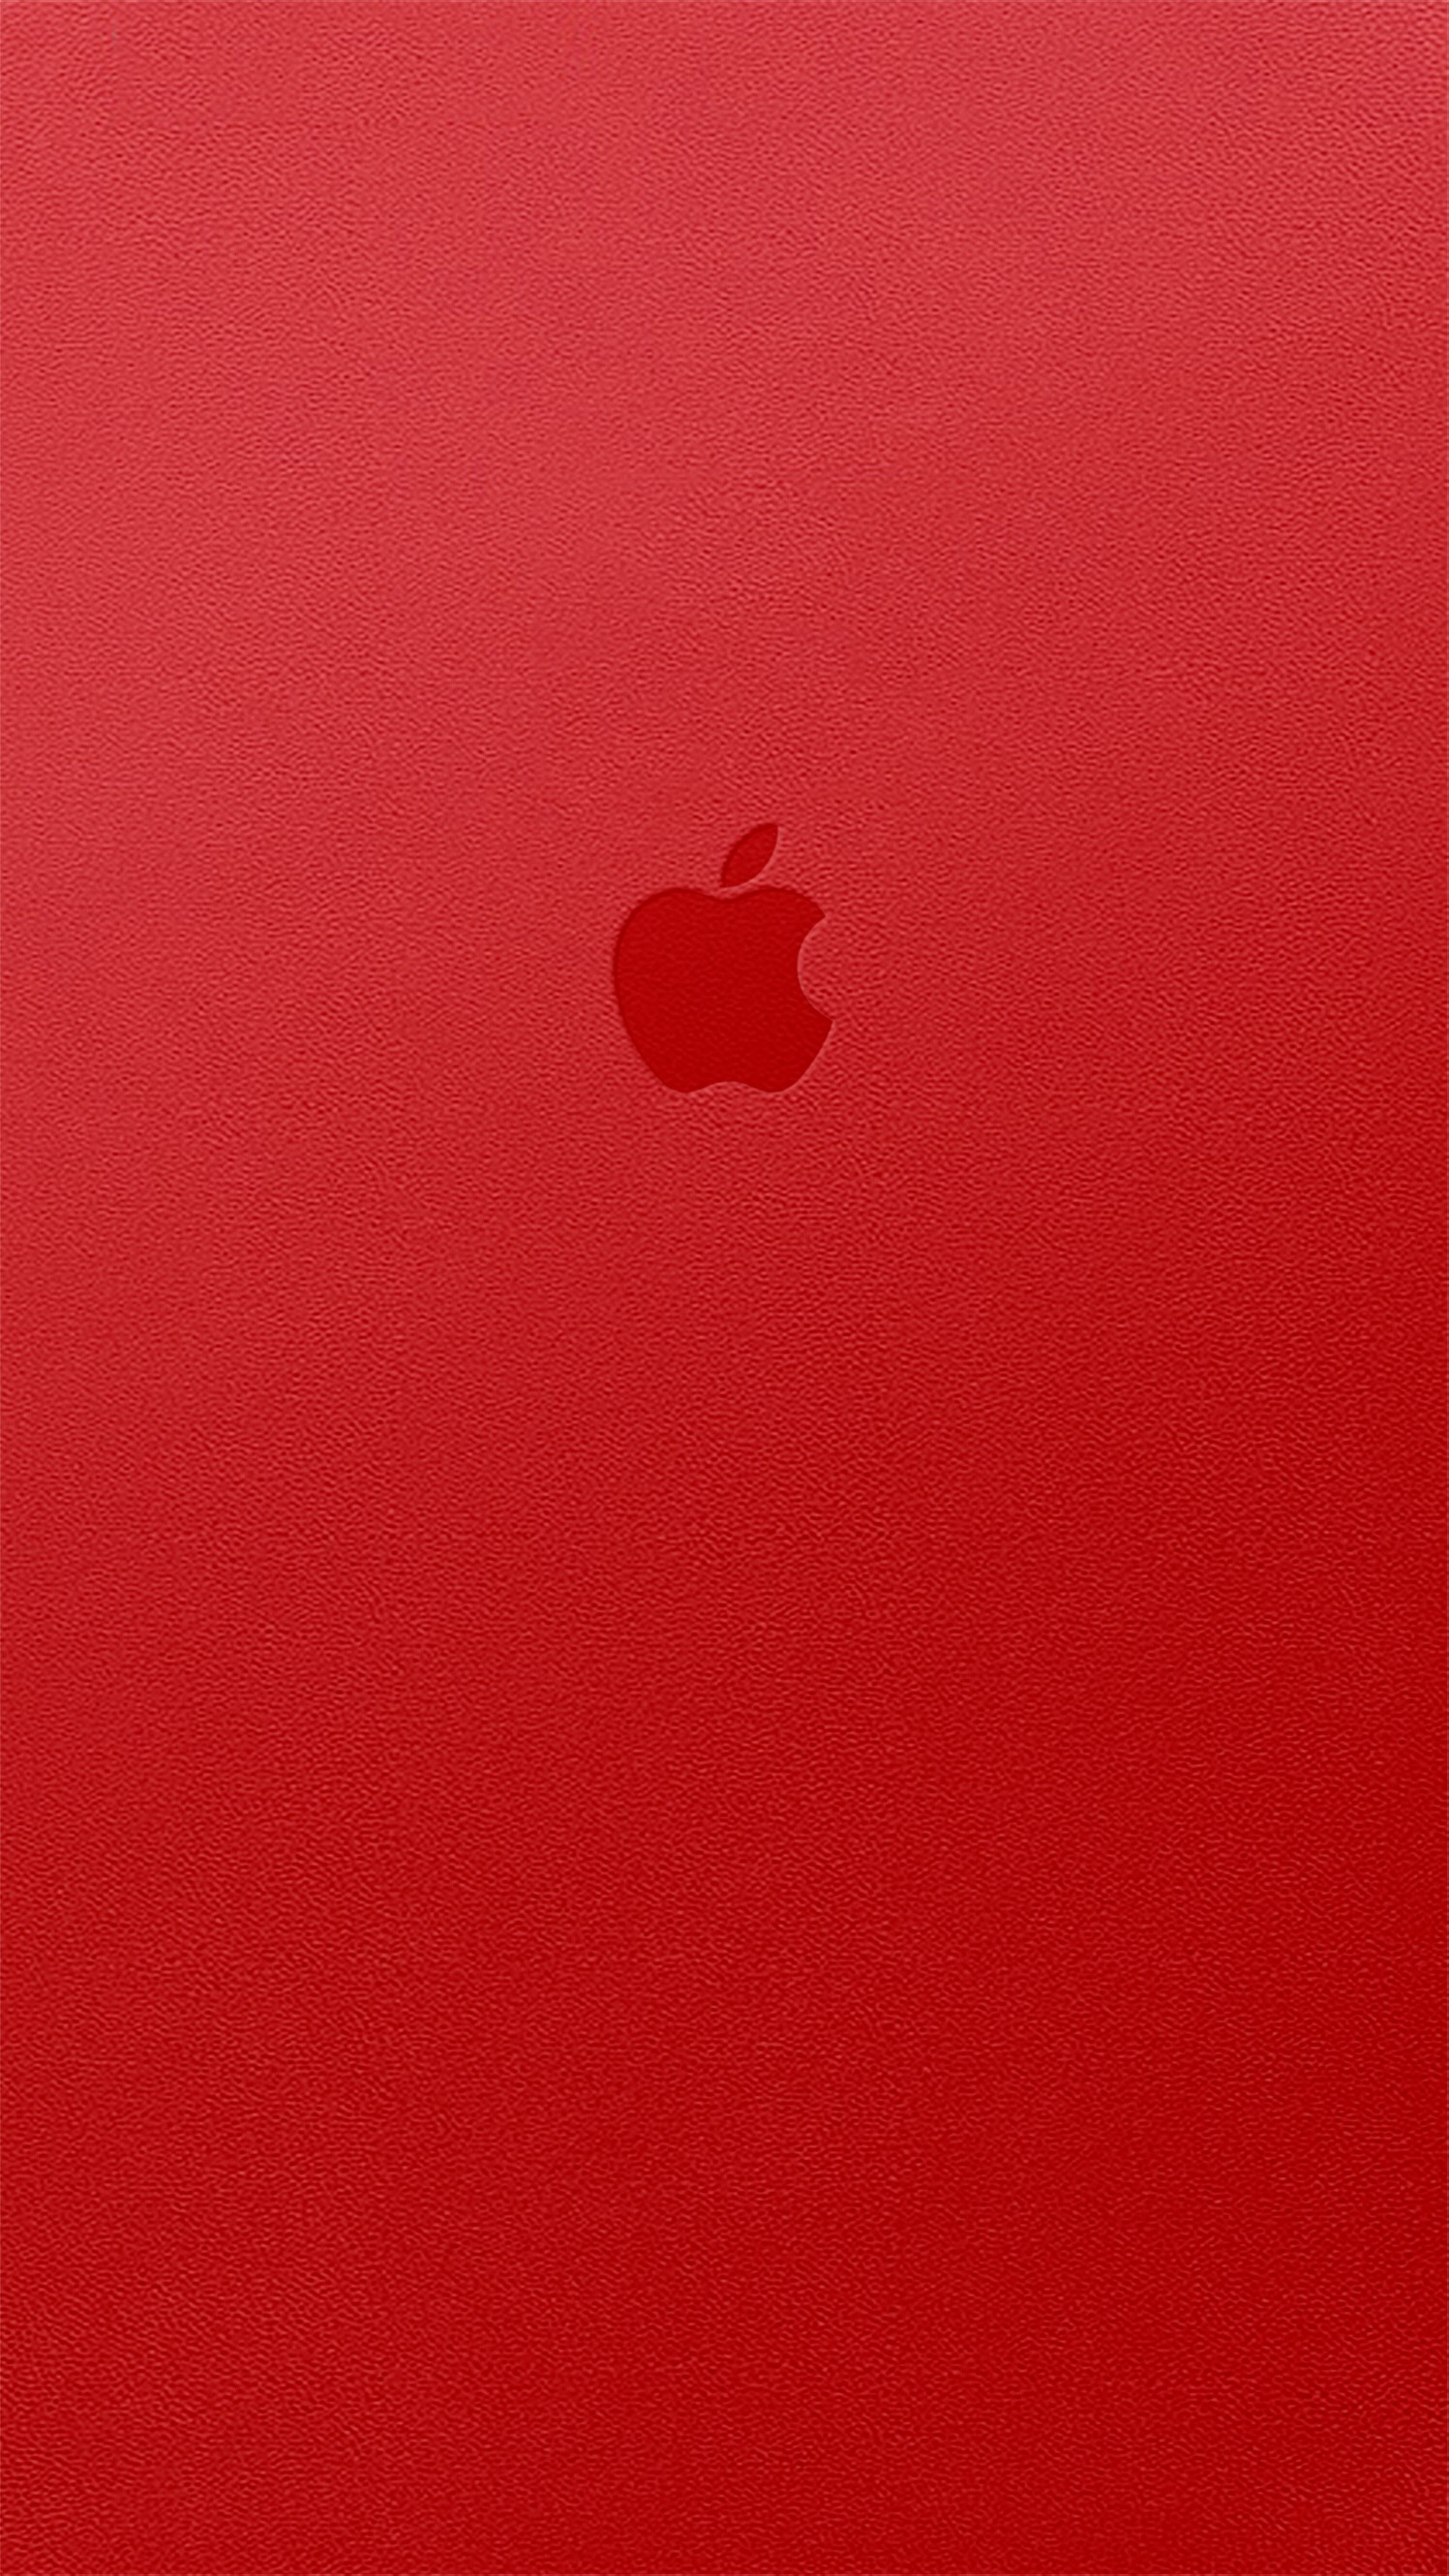 Красный телефон айфон. Айфон 6 Red. Фон на айфон. Фон для телефона айфон. Заставка с красным цветом.